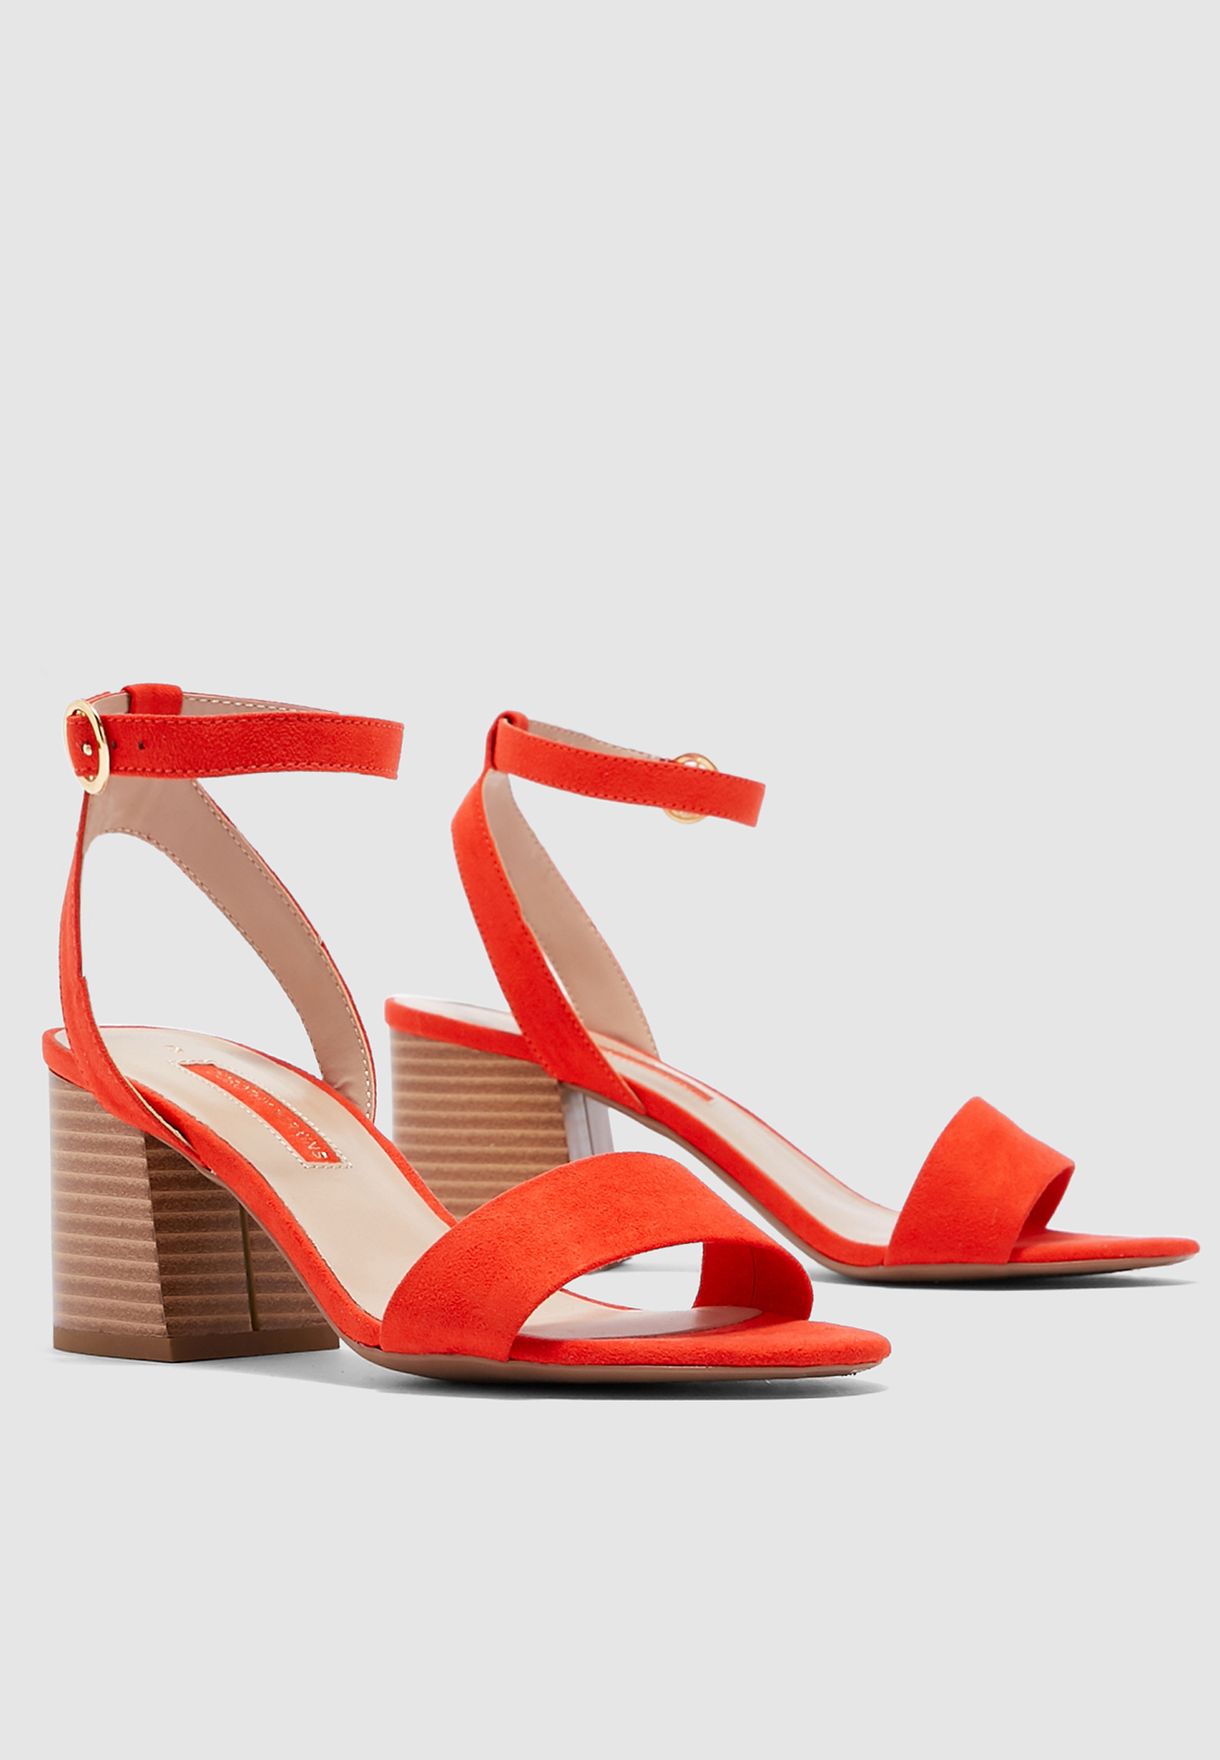 orange block heels wide fit